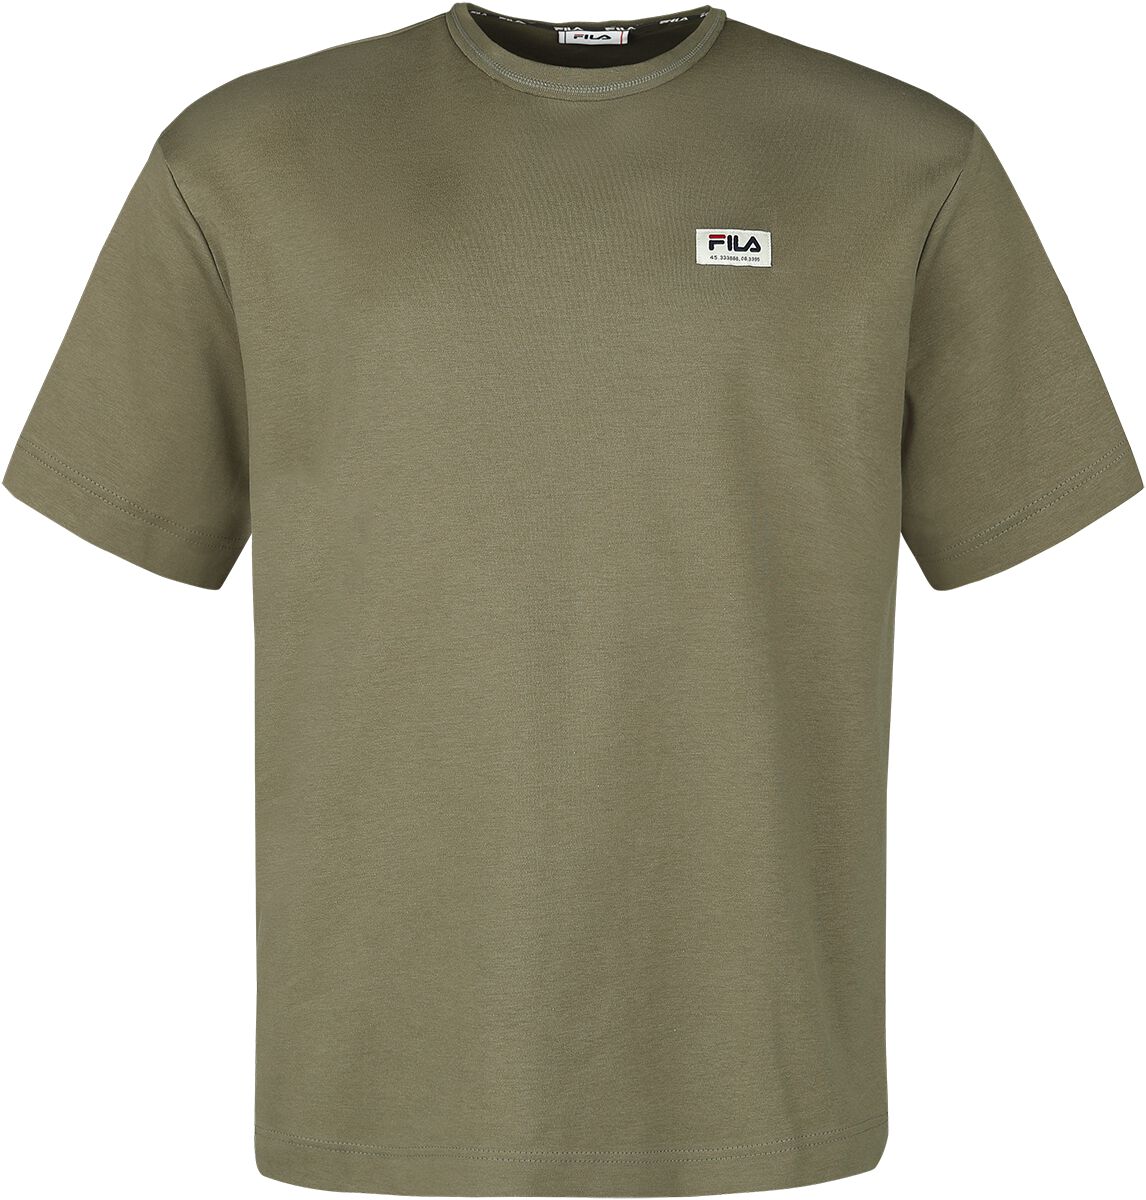 Image of T-Shirt di Fila - TAIPAS oversized t-shirt - S a L - Uomo - verde oliva